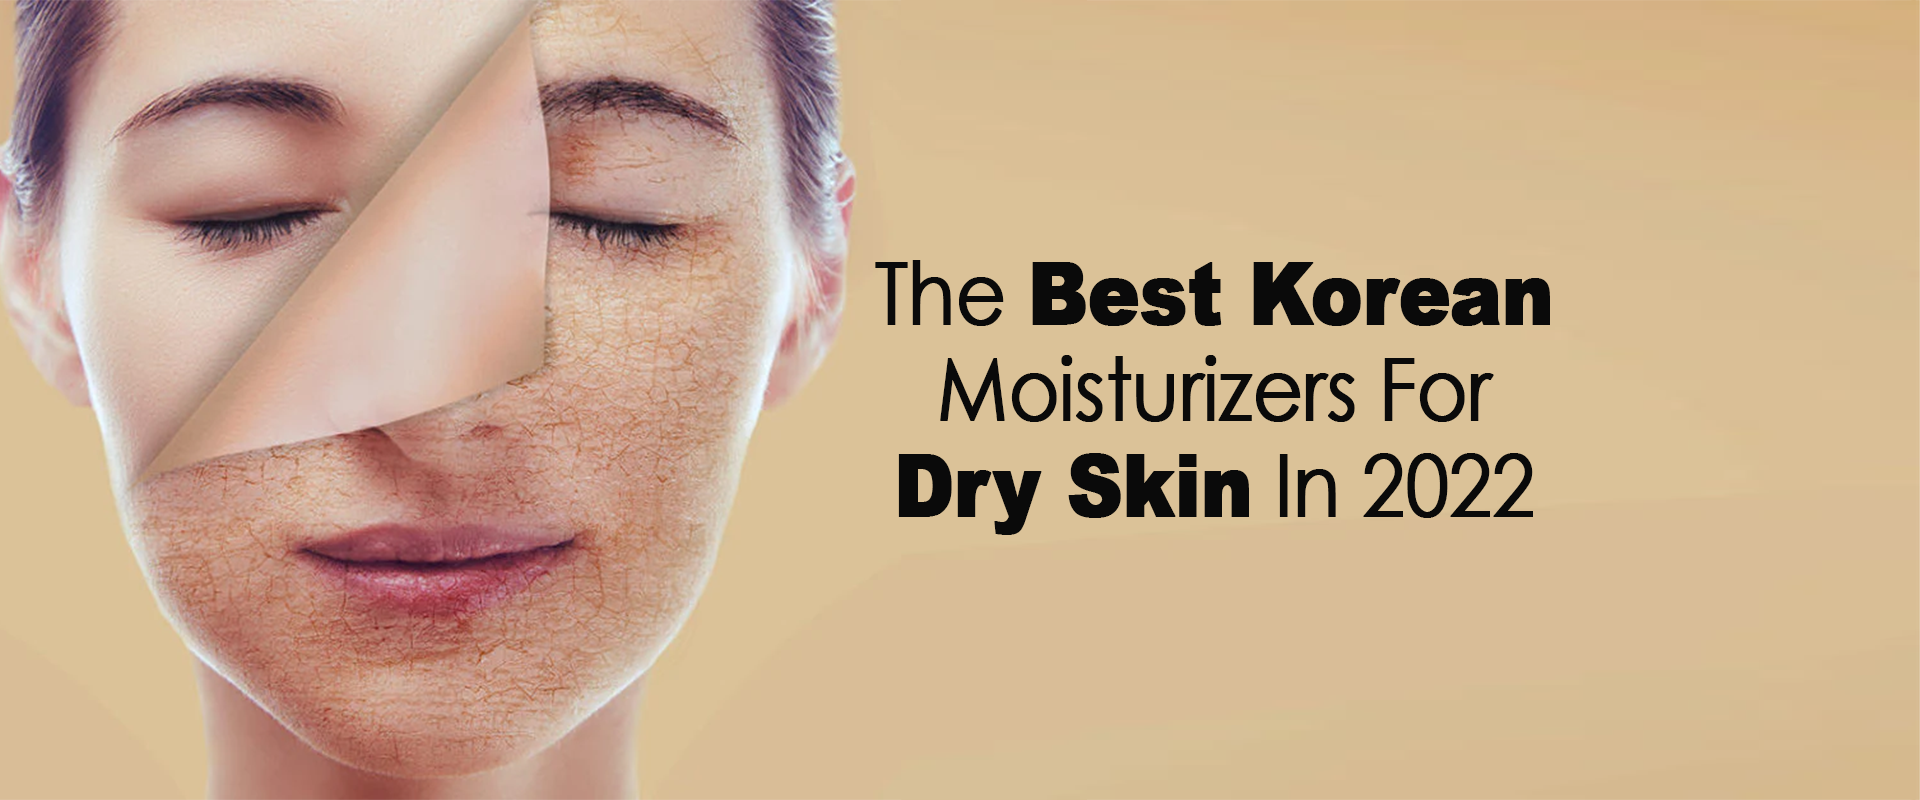 The Best Korean Moisturizers for Dry Skin in 2022